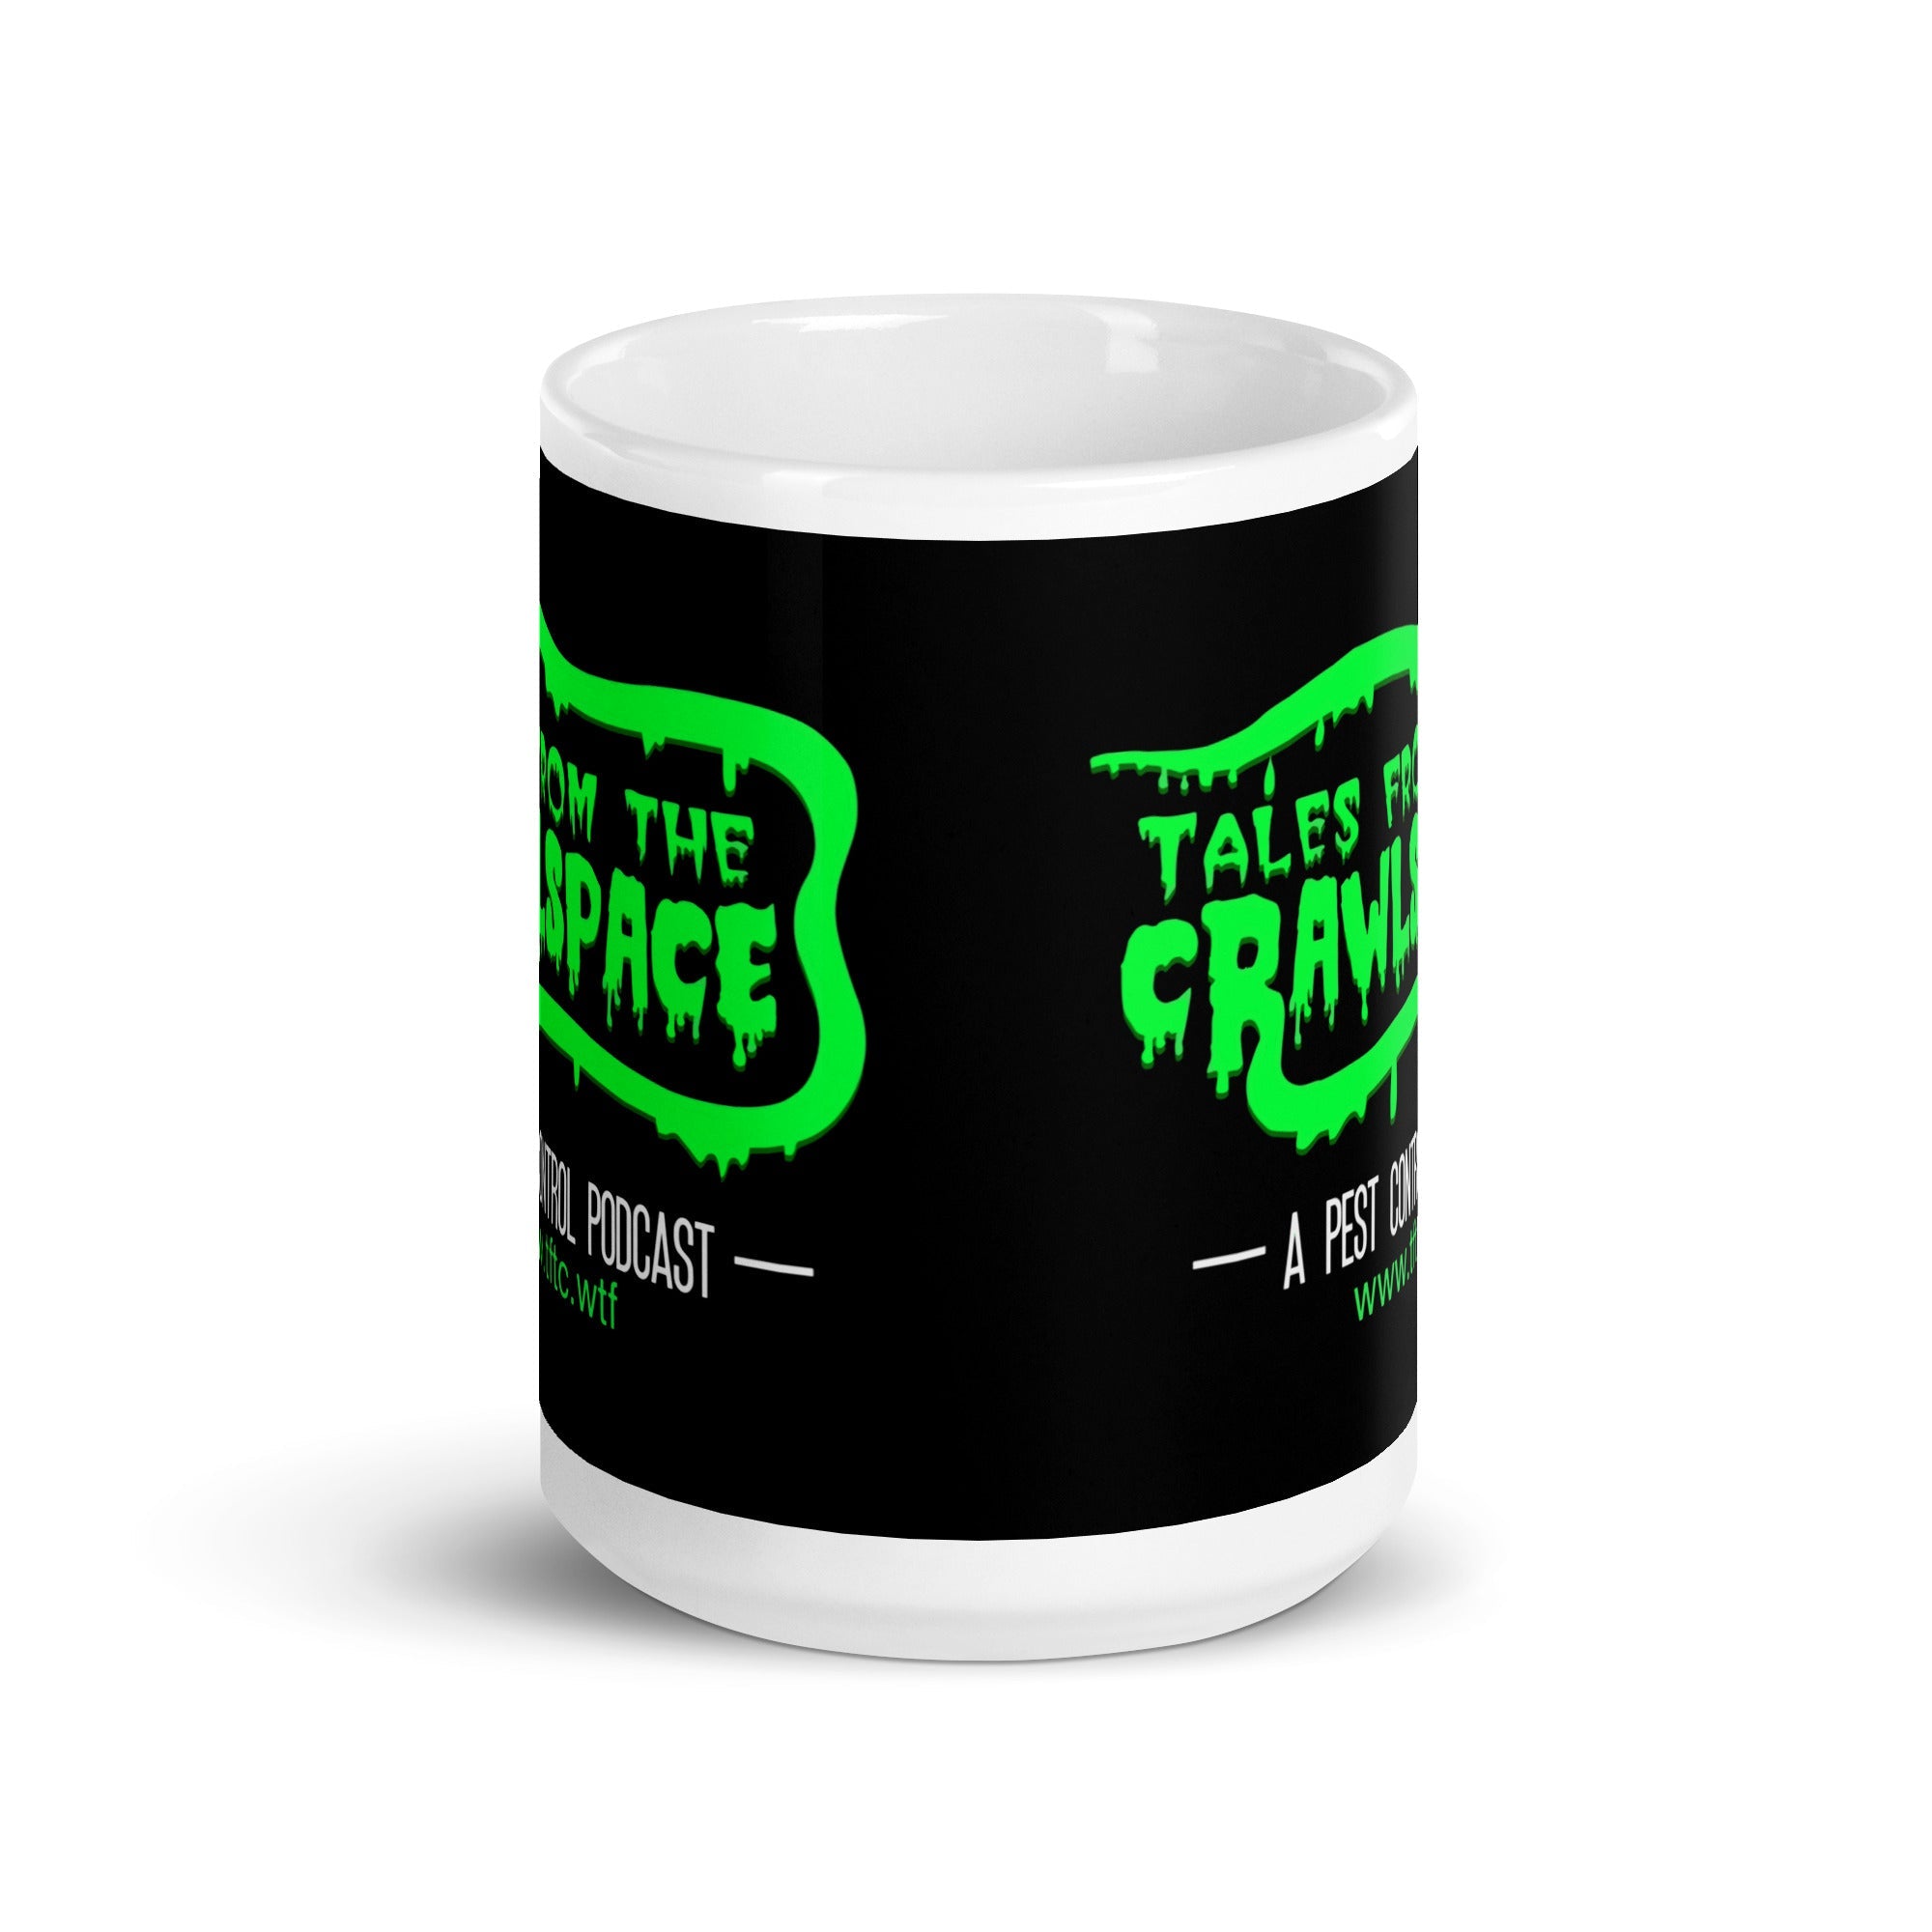 TFTC White glossy mug